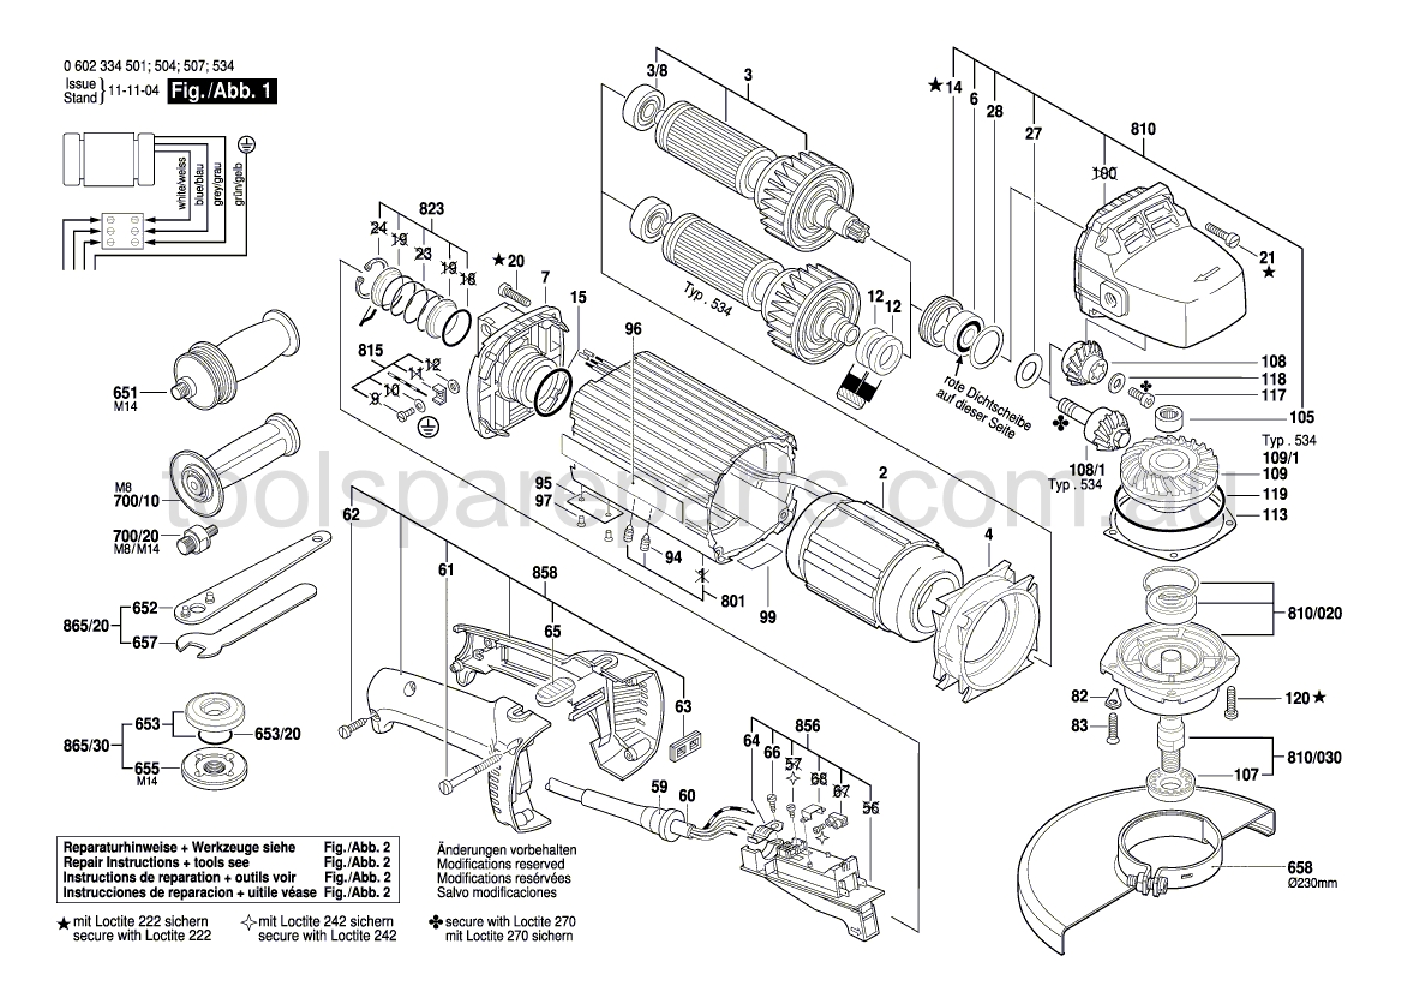 Bosch HWS 810/230 0602334501  Diagram 1